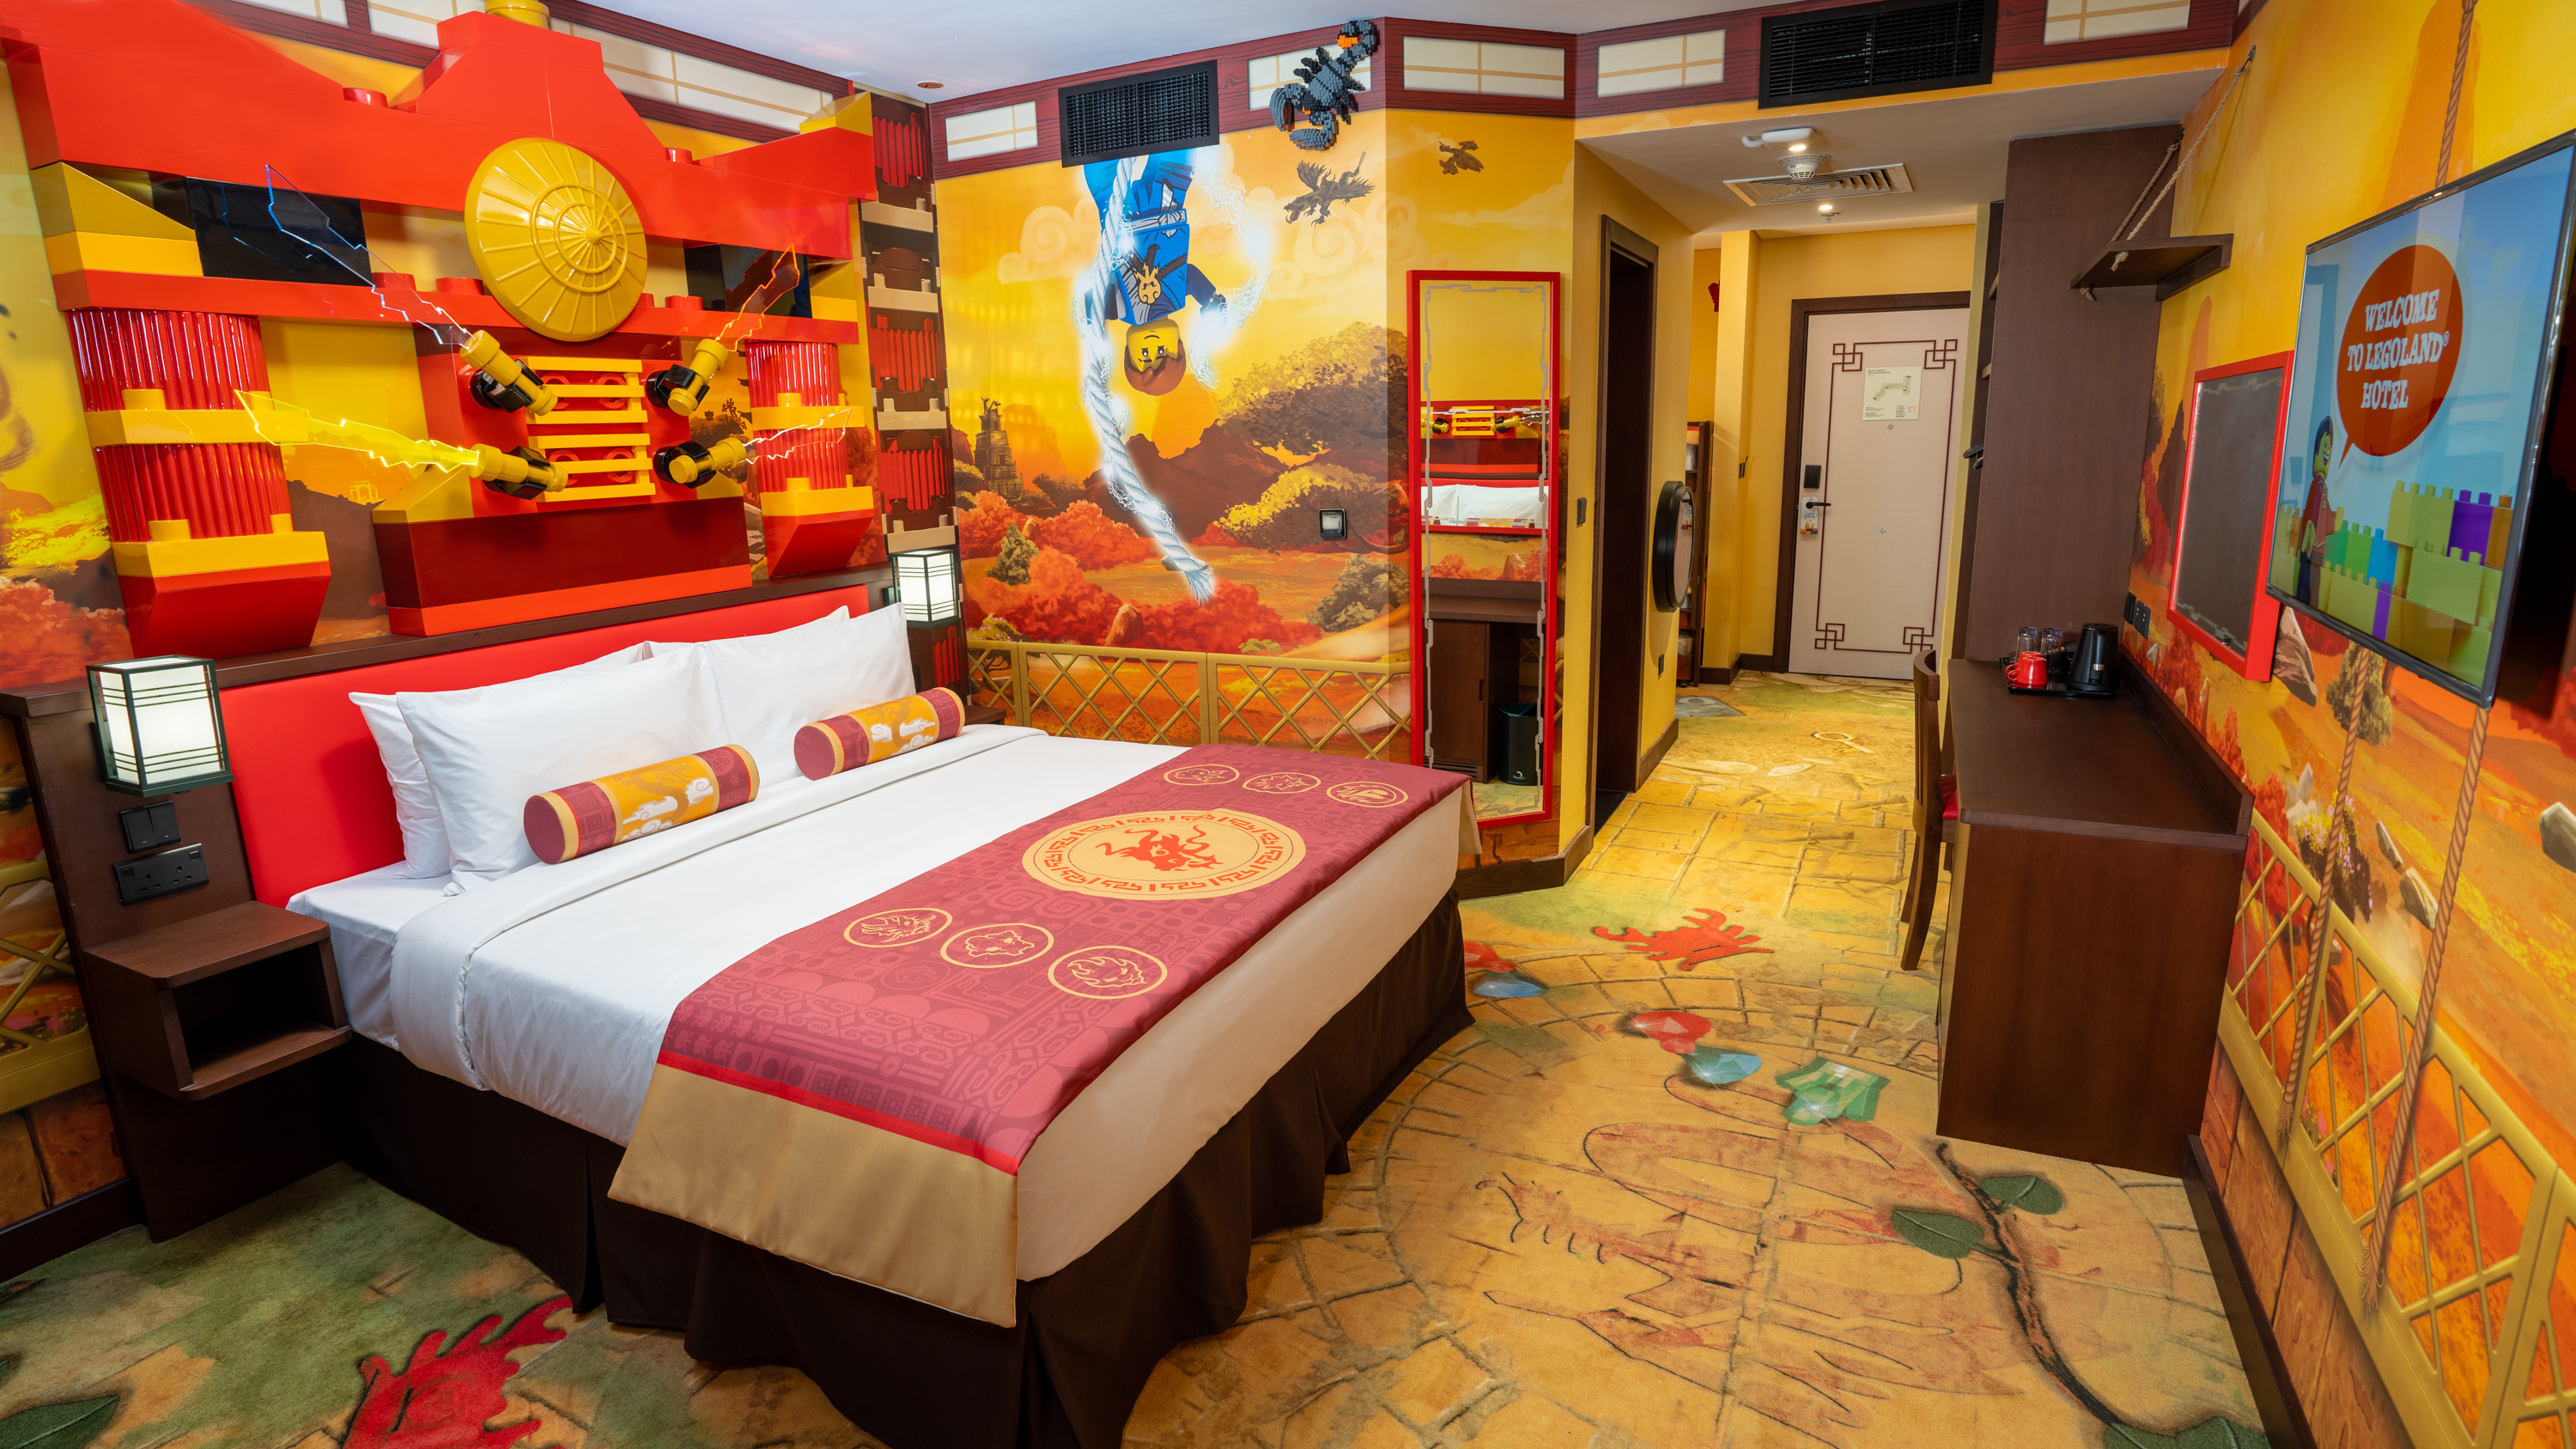 Legoland Hotel Room Interior Ninjago 11(PS)